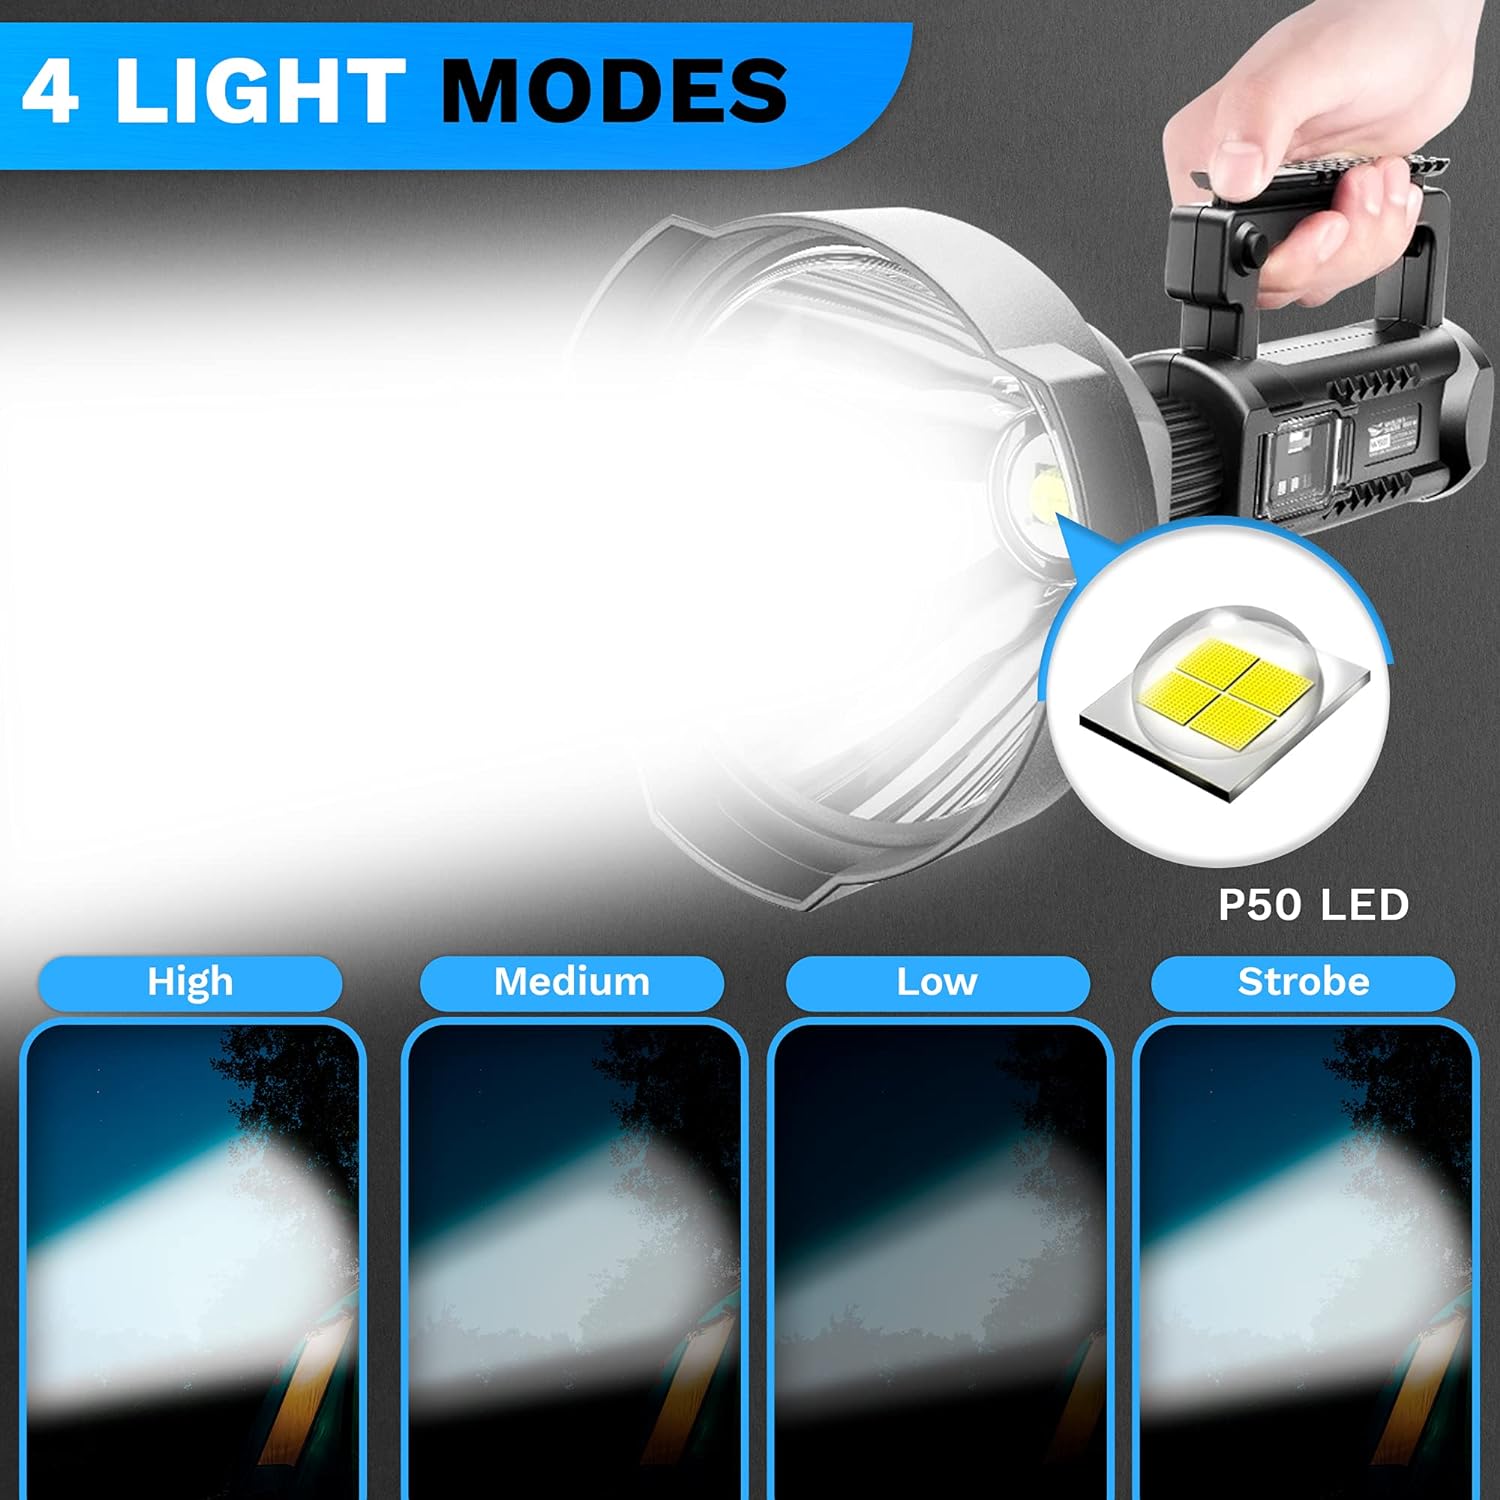 High Brightness LED Flashlight, High Brightness 90000 Lumens 4 Modes Rechargeable LED Flashlight IPX5 Waterproof Dustproof Flashlight for Camping Emergency,